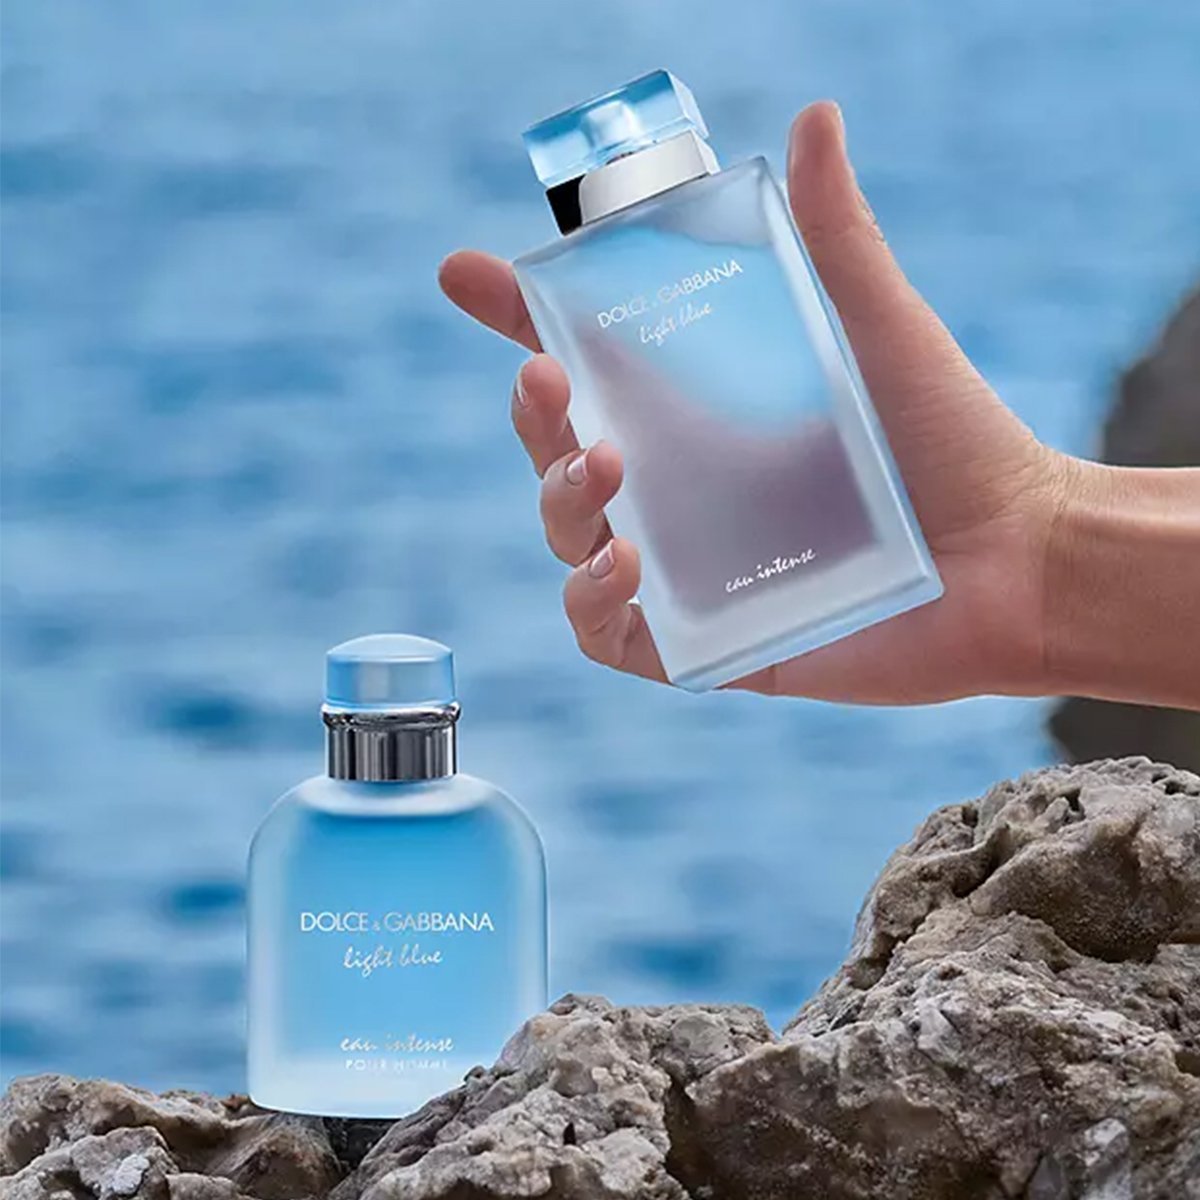 Dolce & Gabbana Light Blue Eau Intense Set For Men | My Perfume Shop Australia